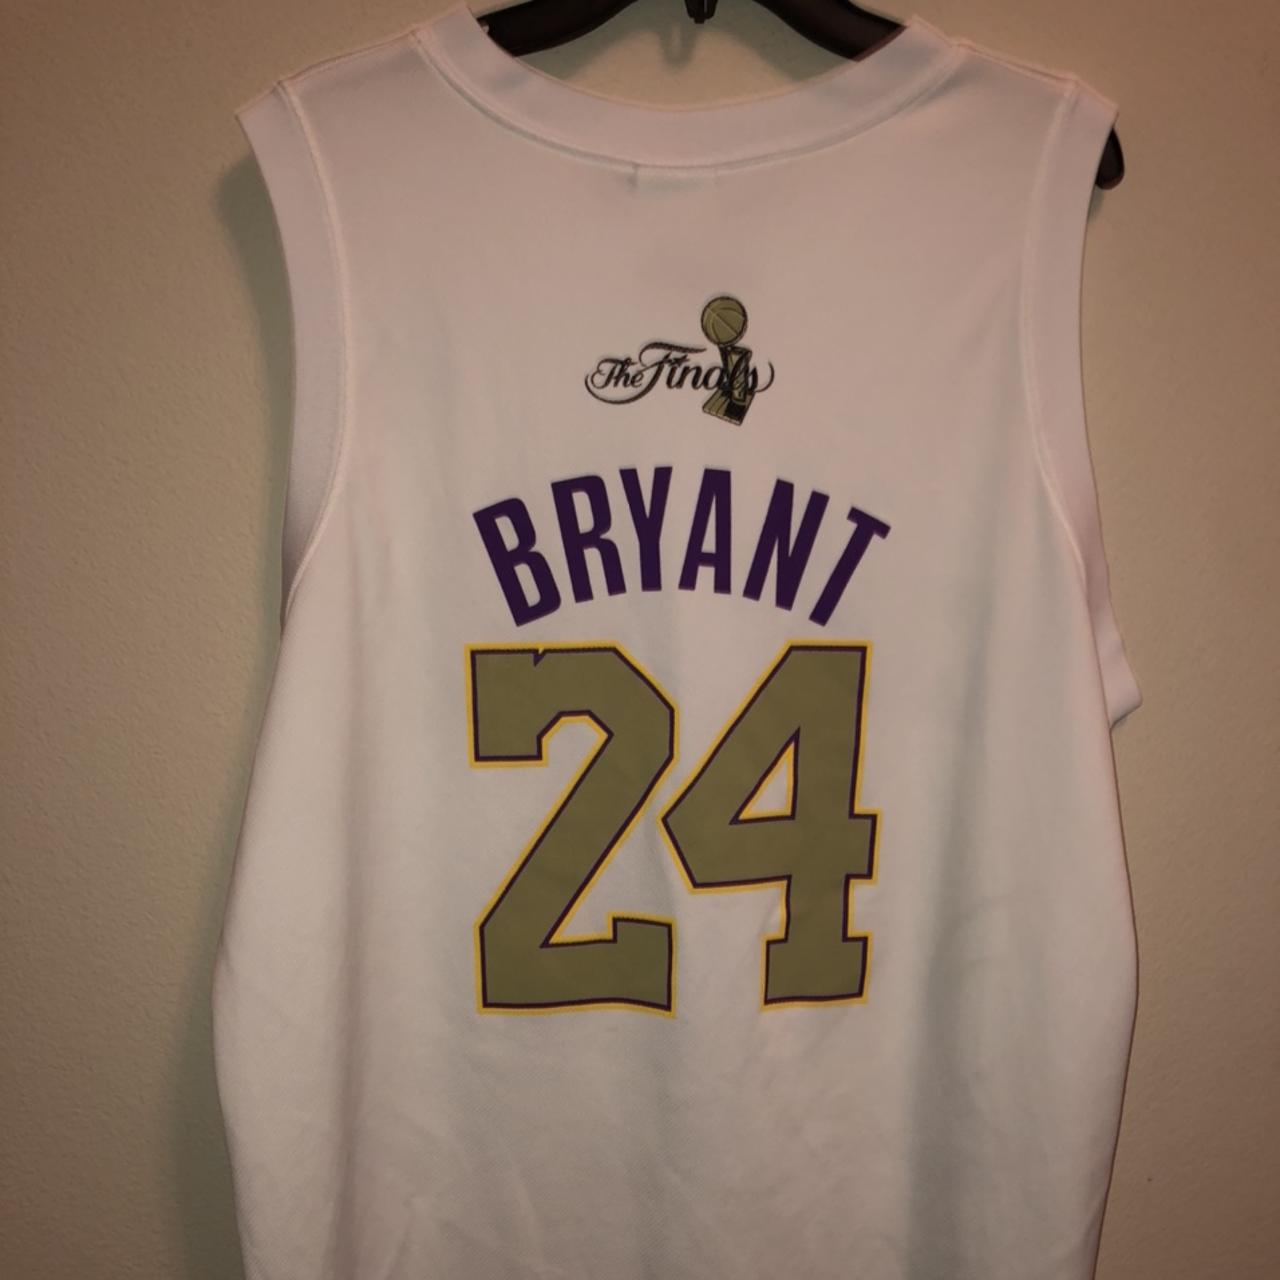 Kobe Bryant '03 NBA Allstar Jersey Mitchell & Ness - Depop